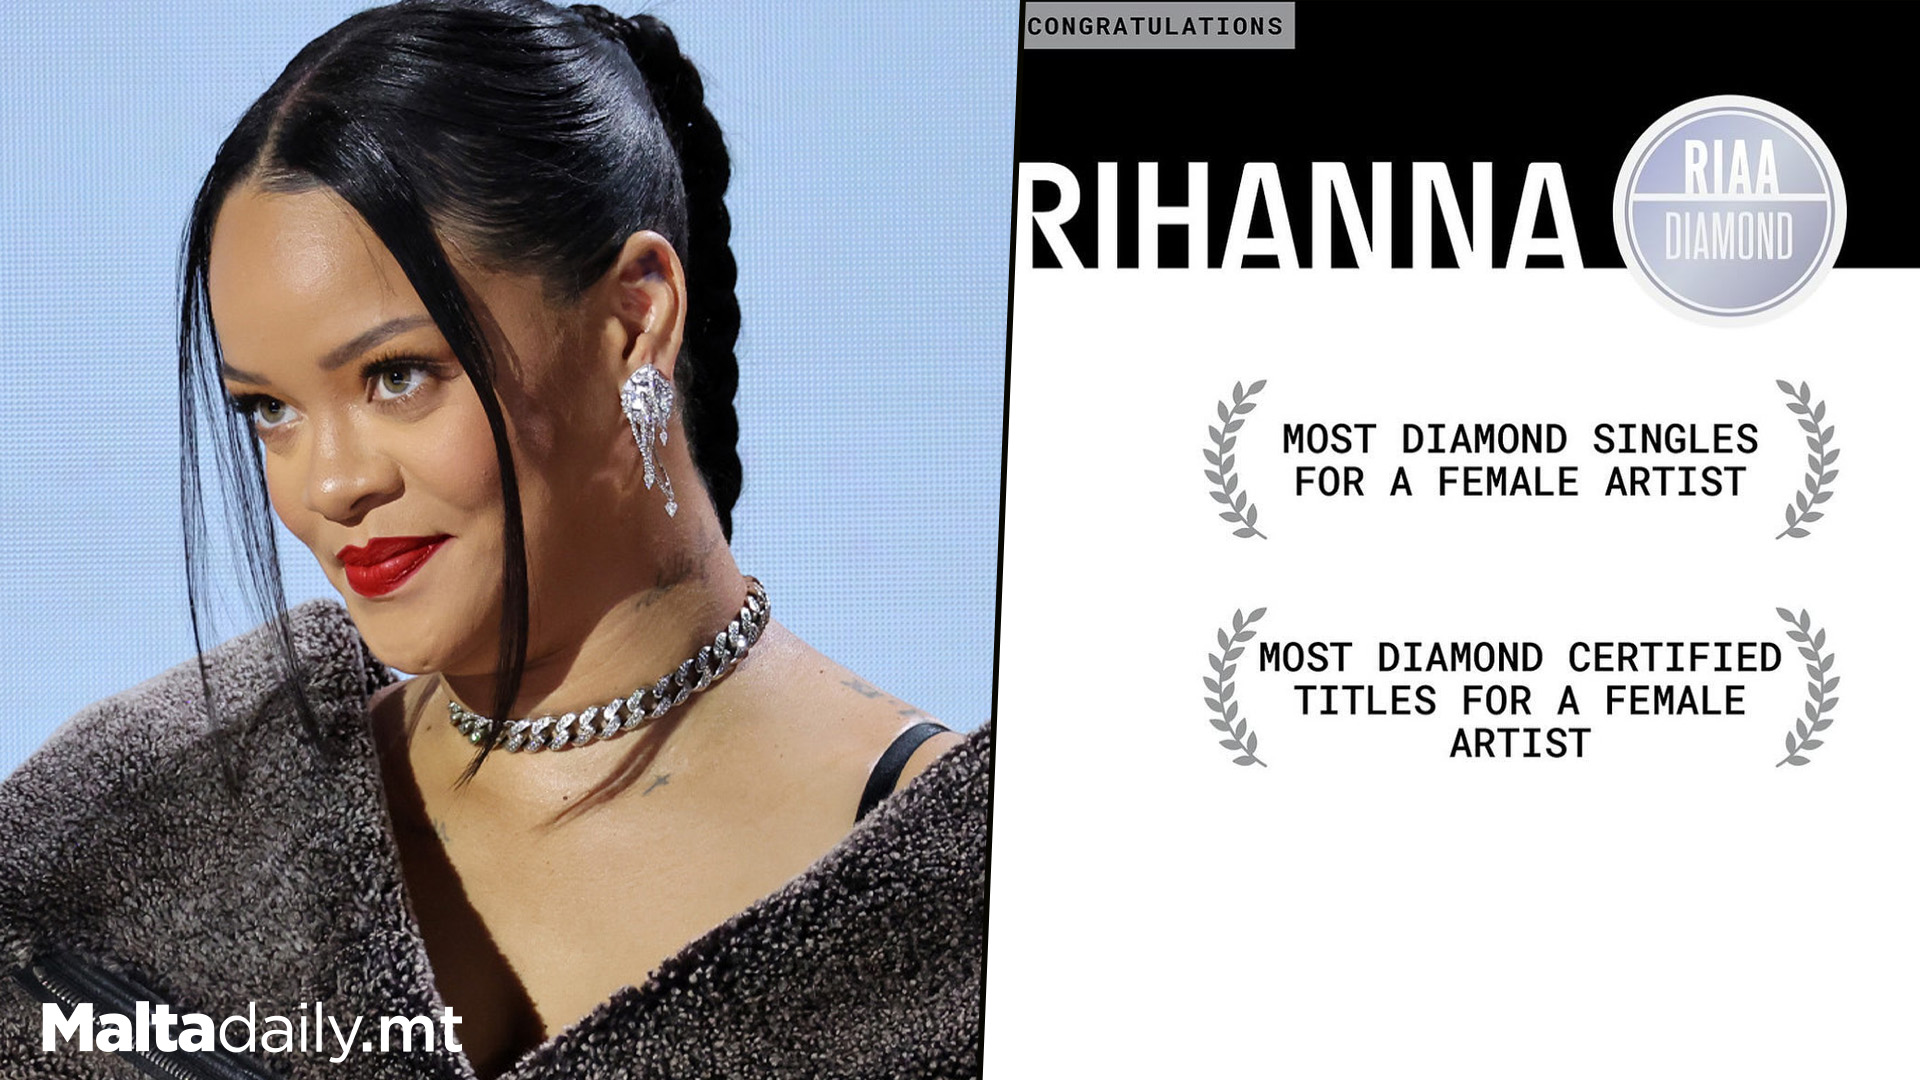 Rihanna Sets 2 New Records For Diamond Singles & Titles